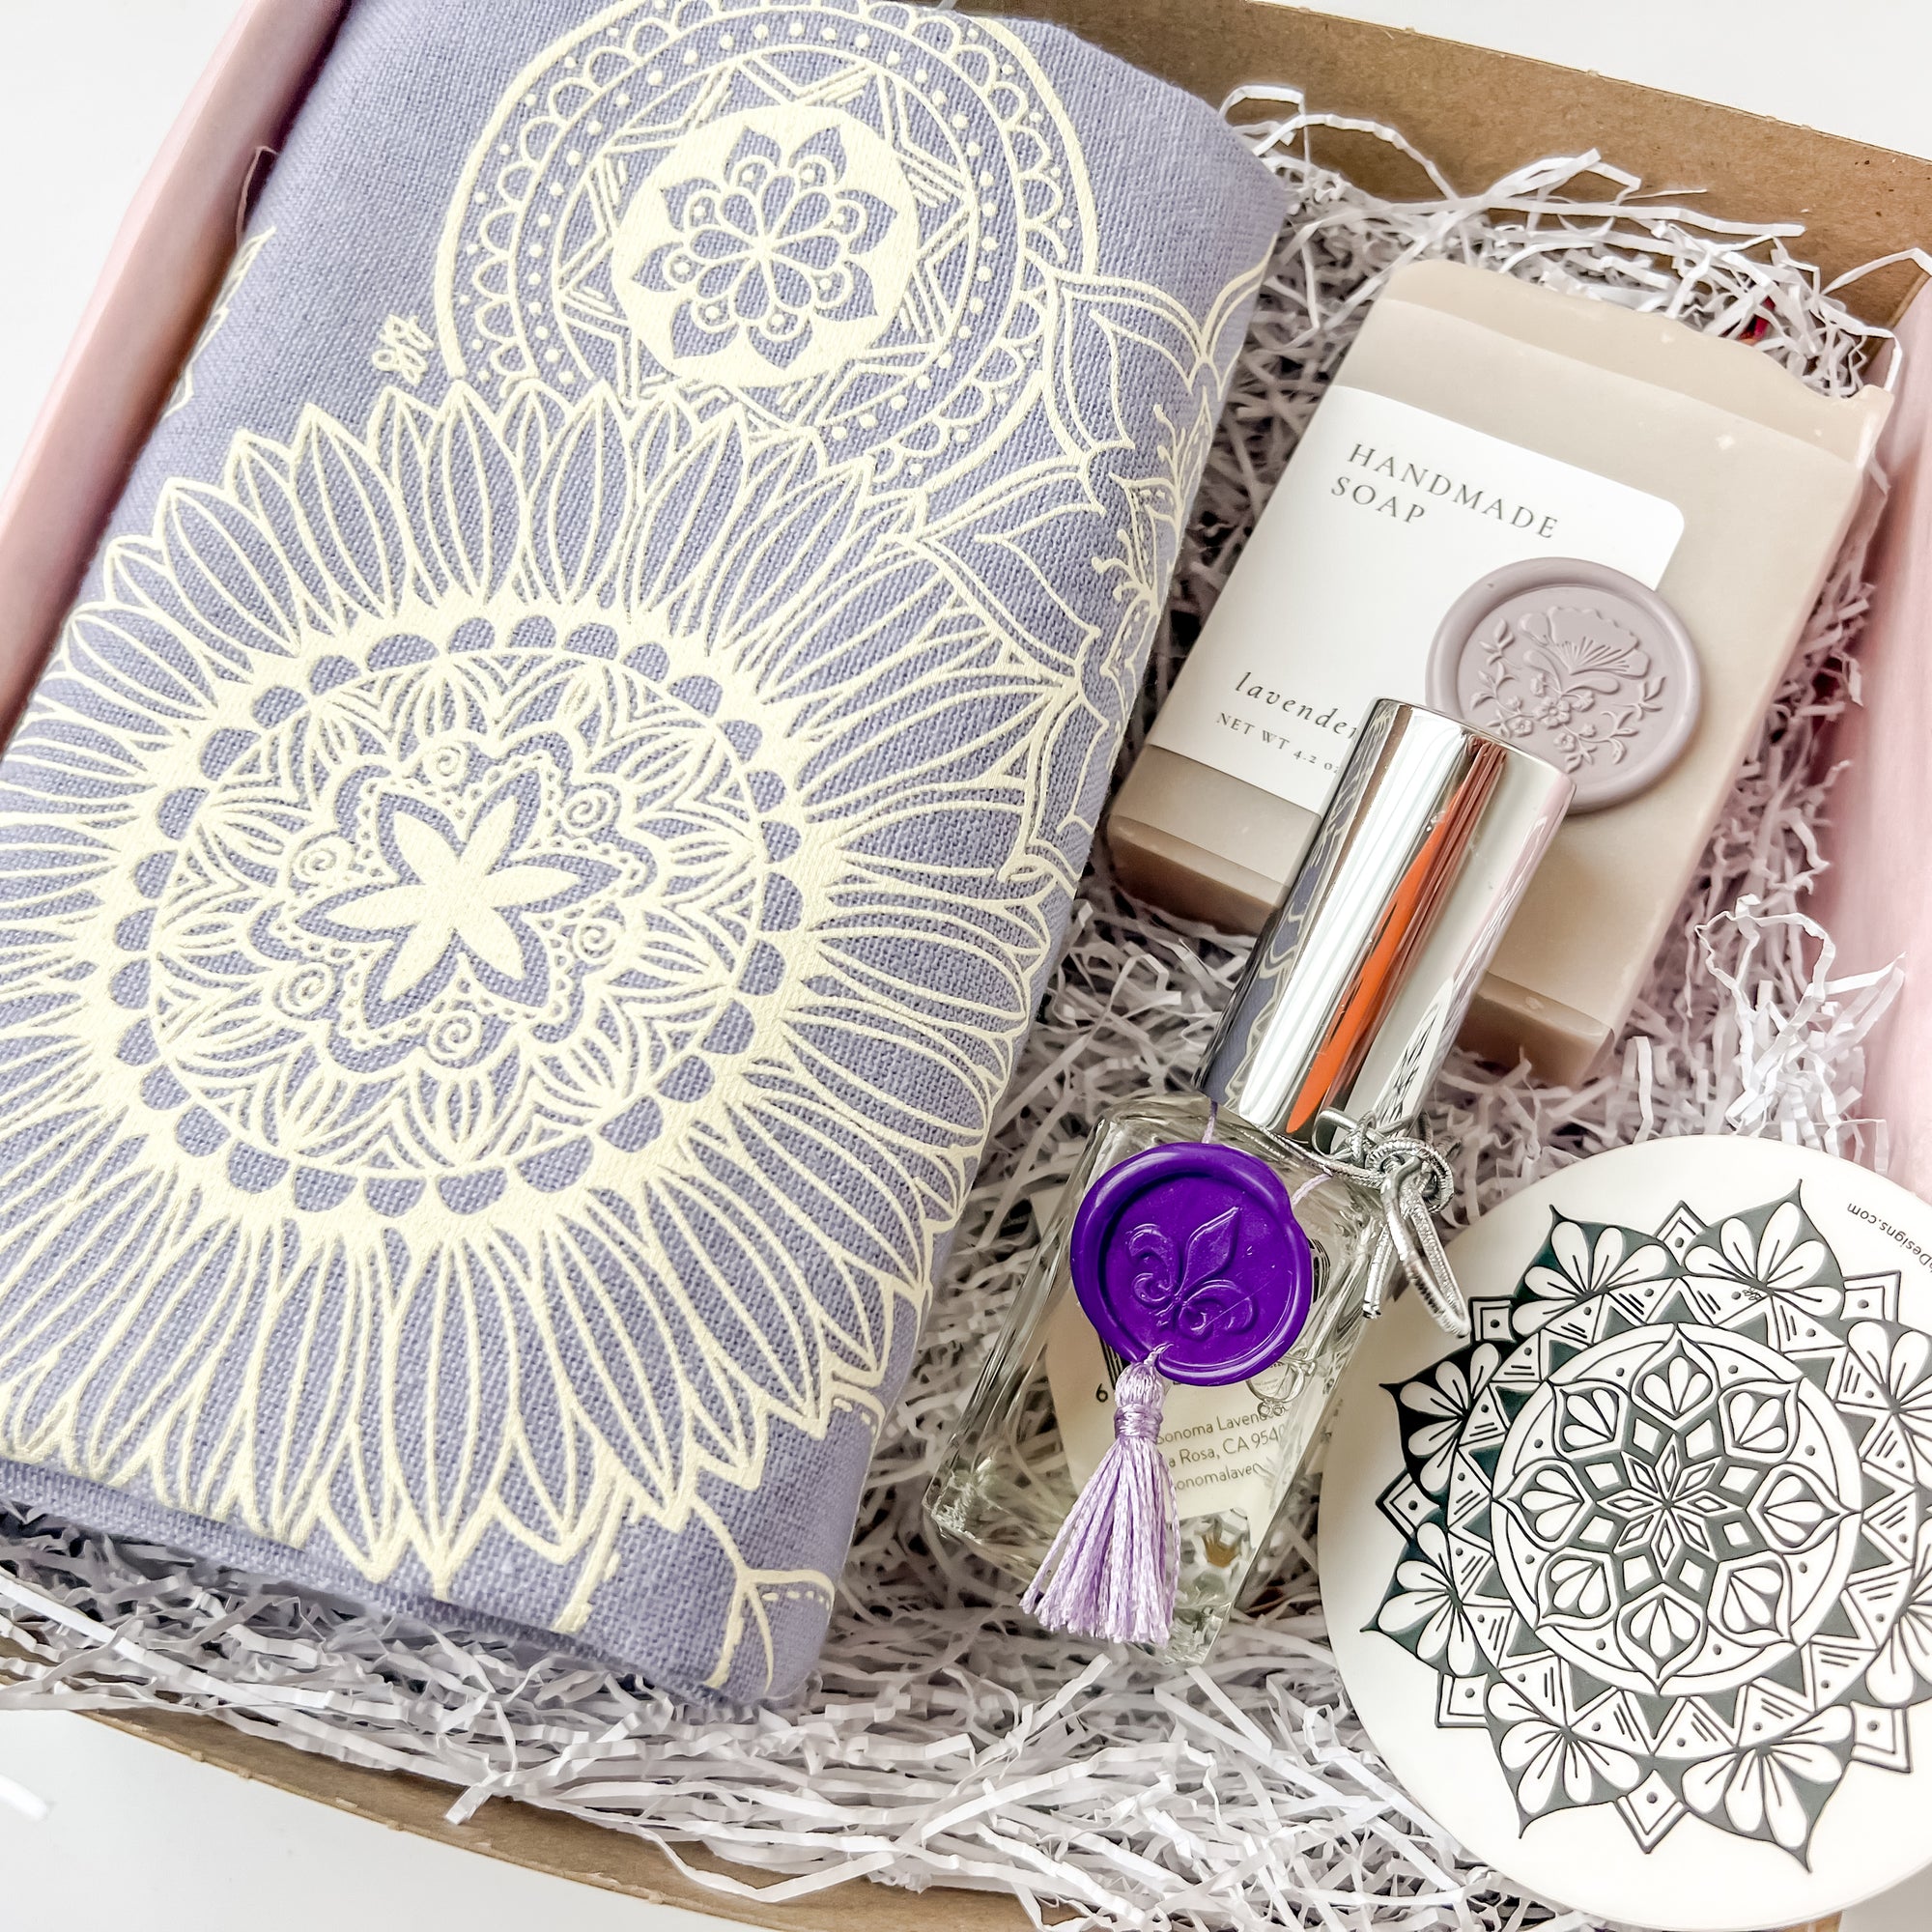 Lavender Gift Box - a Petal + Hive / Nourish Designs Collaboration